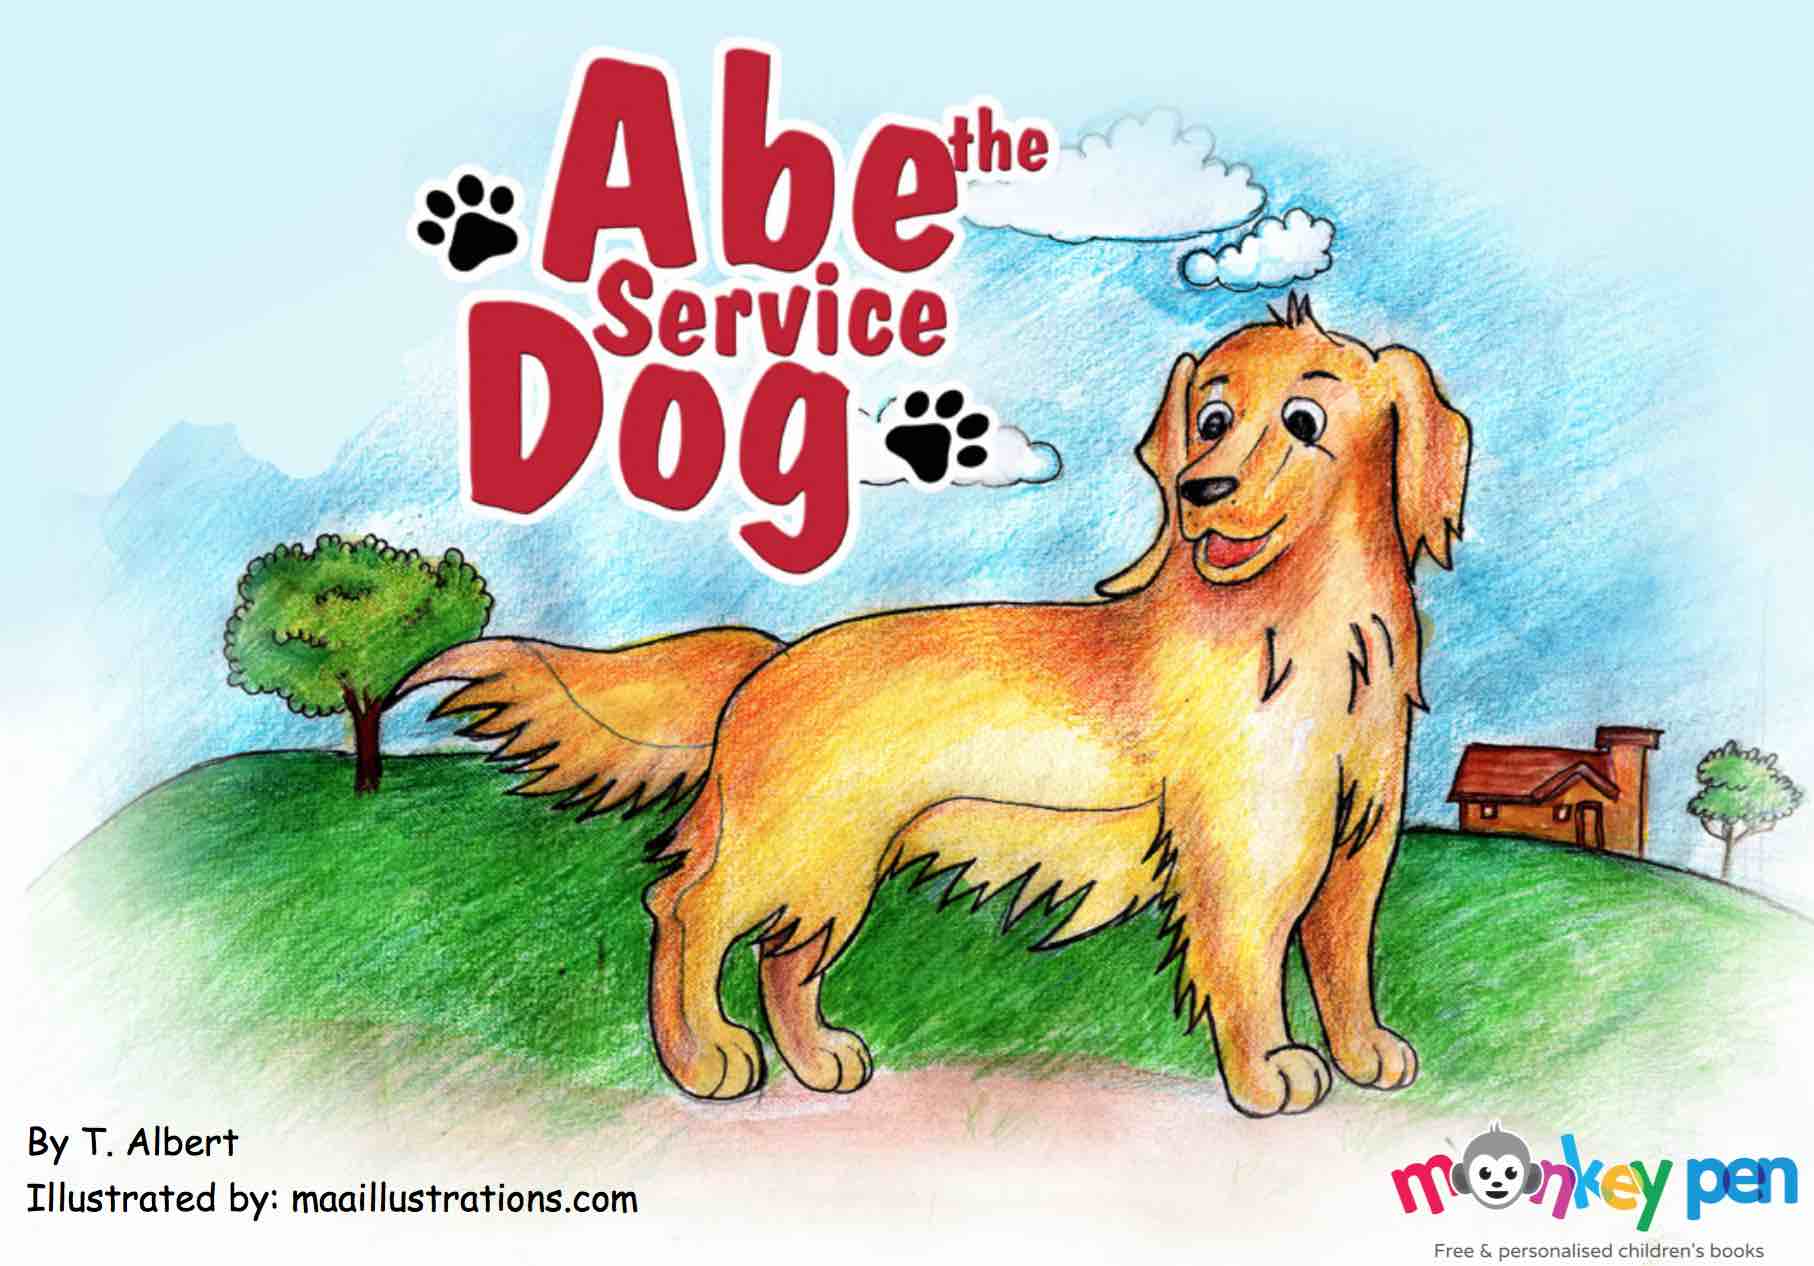 Abe the Service Dog - Monkey Pen - Free Kids Books